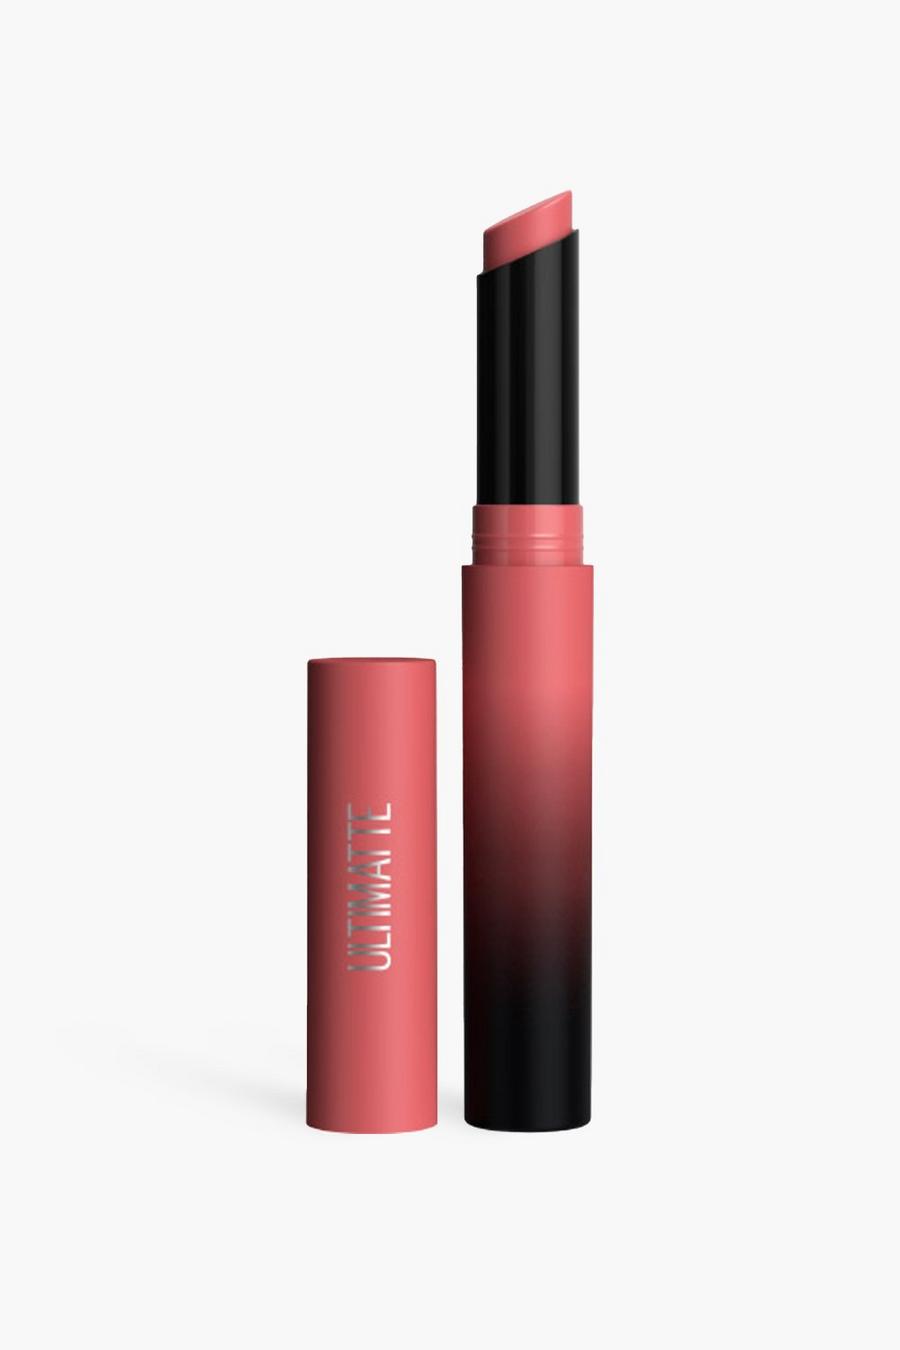 Blush pink Maybelline Colour Sensational Ultimatte Slim Lipstick